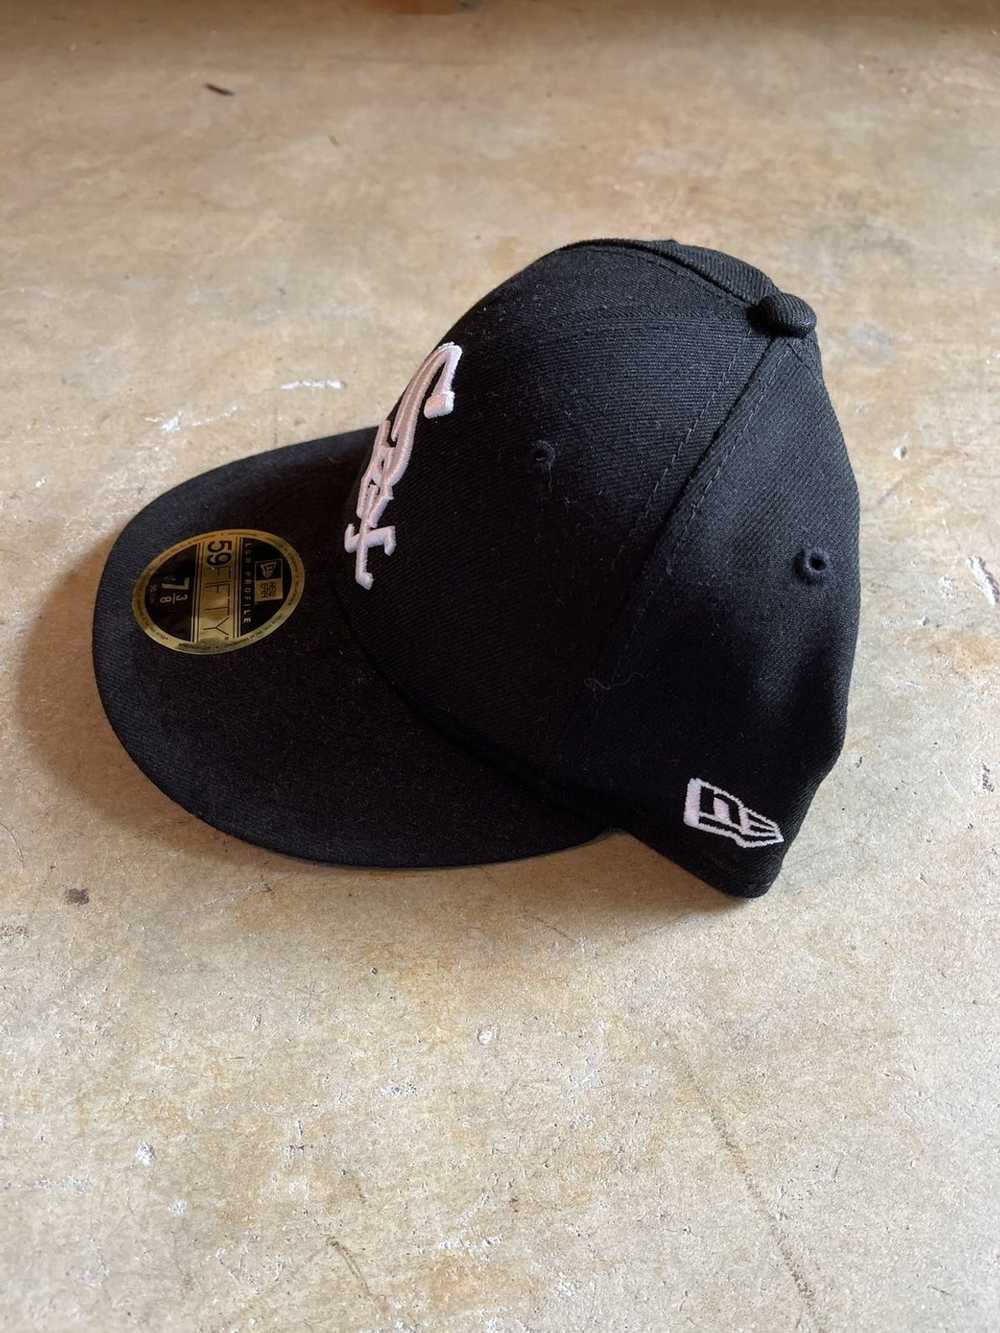 New Era Black New Era Fitted Hat - image 2